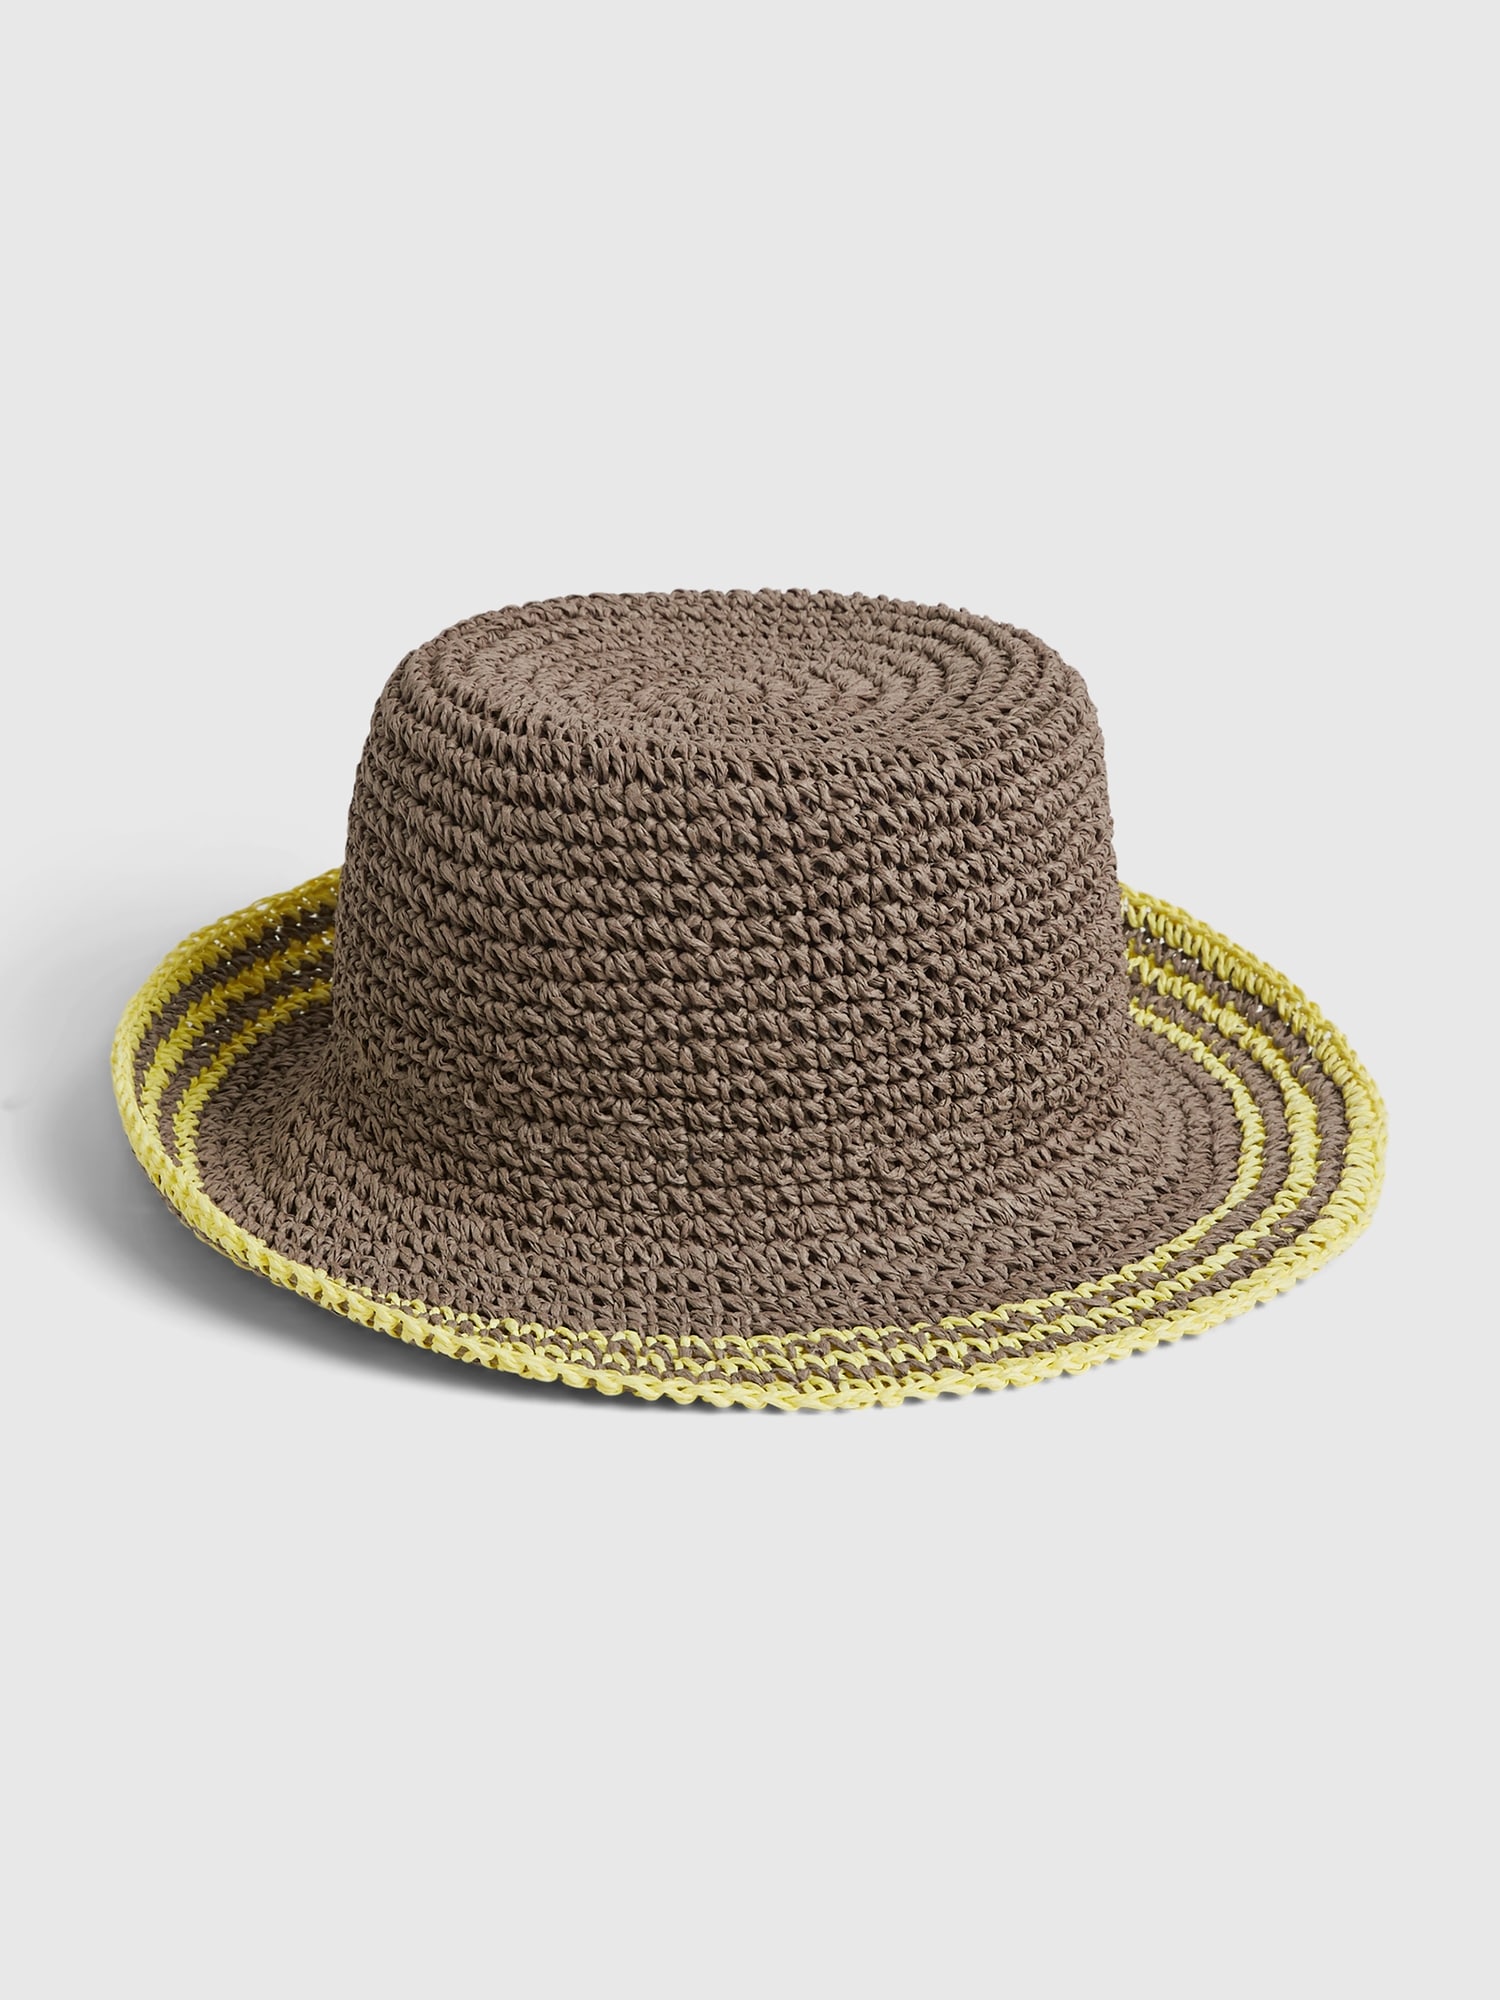 Gap Women's Packable Straw Hat